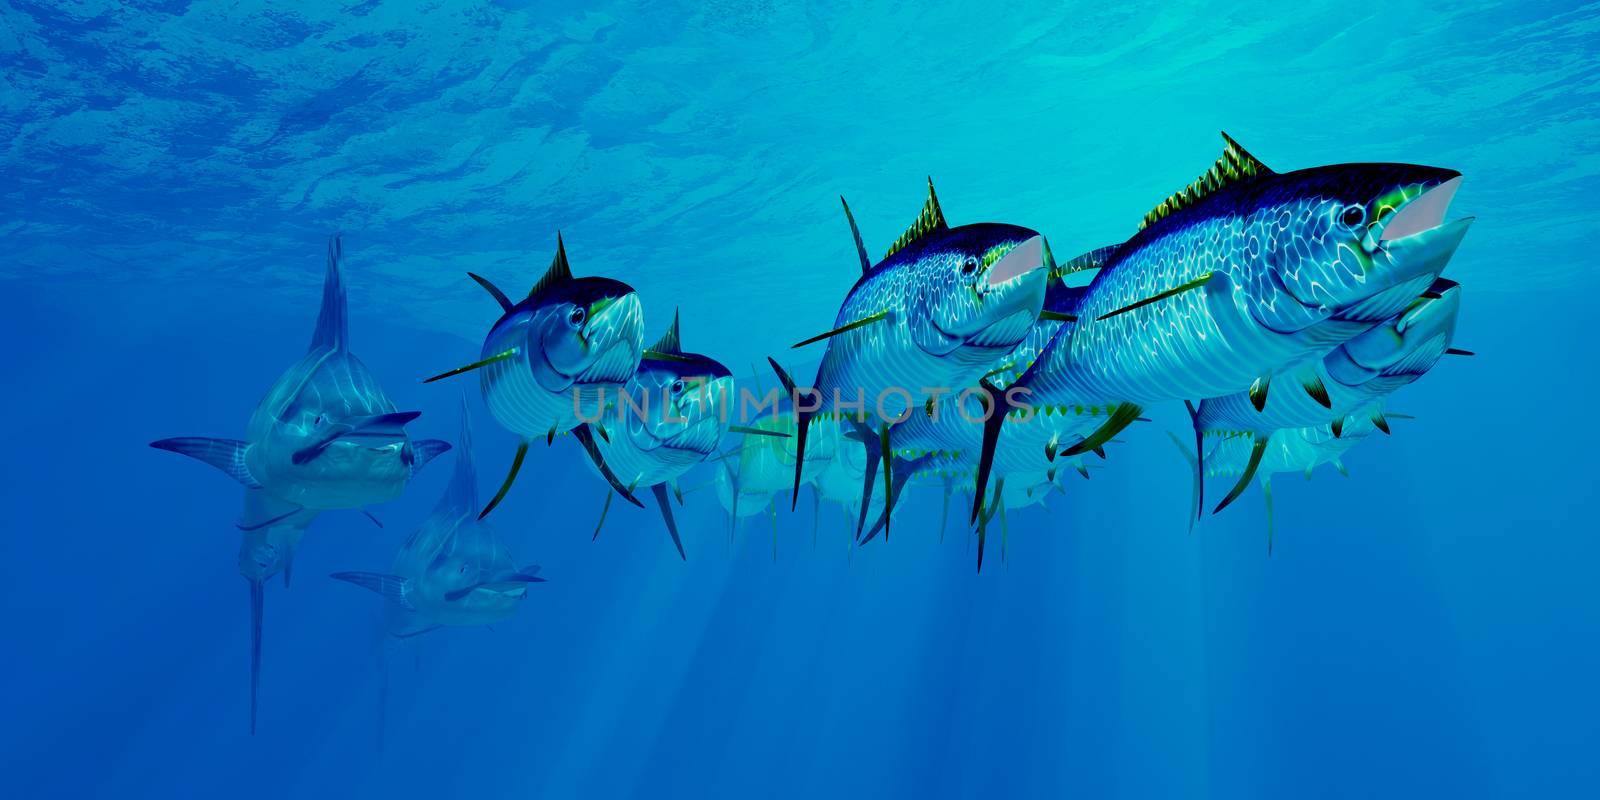 Predatory Blue Marlin chase after an undersea school of Yellowfin Tuna fish in the Atlantic ocean.